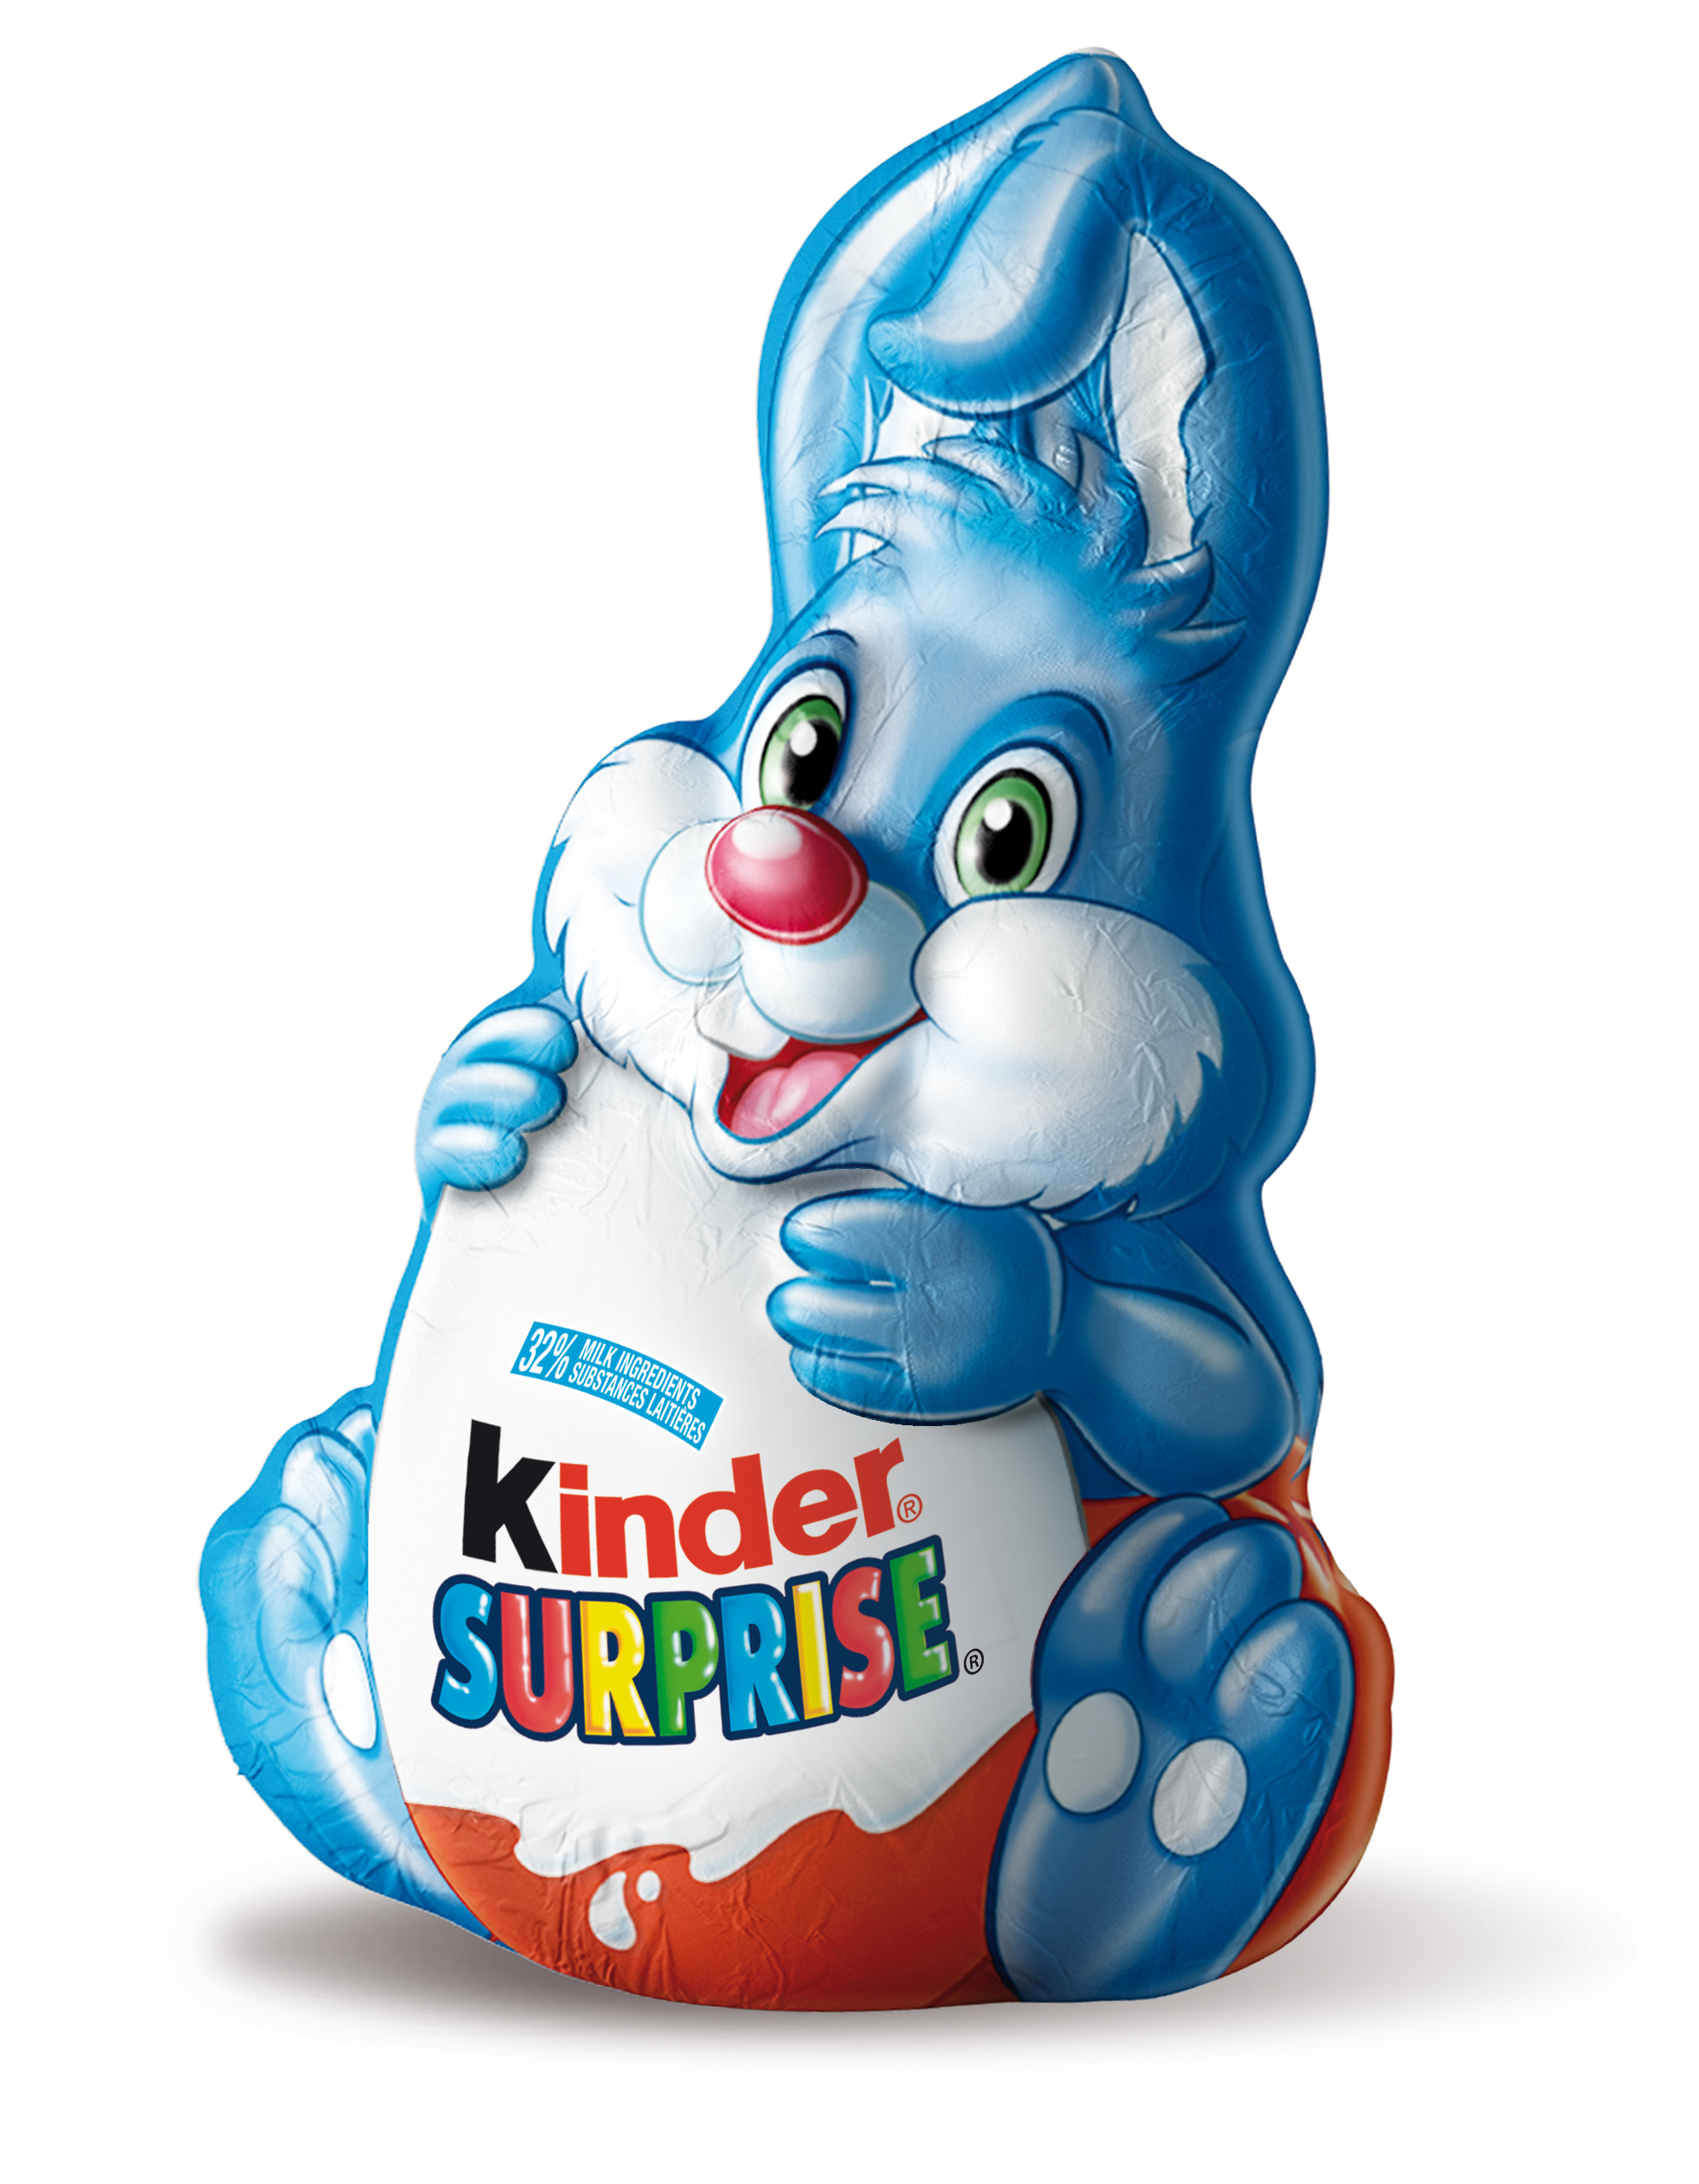 Синие киндеры. Киндер. Киндер сюрприз. Kinder сюрприз. Киндер кролик.